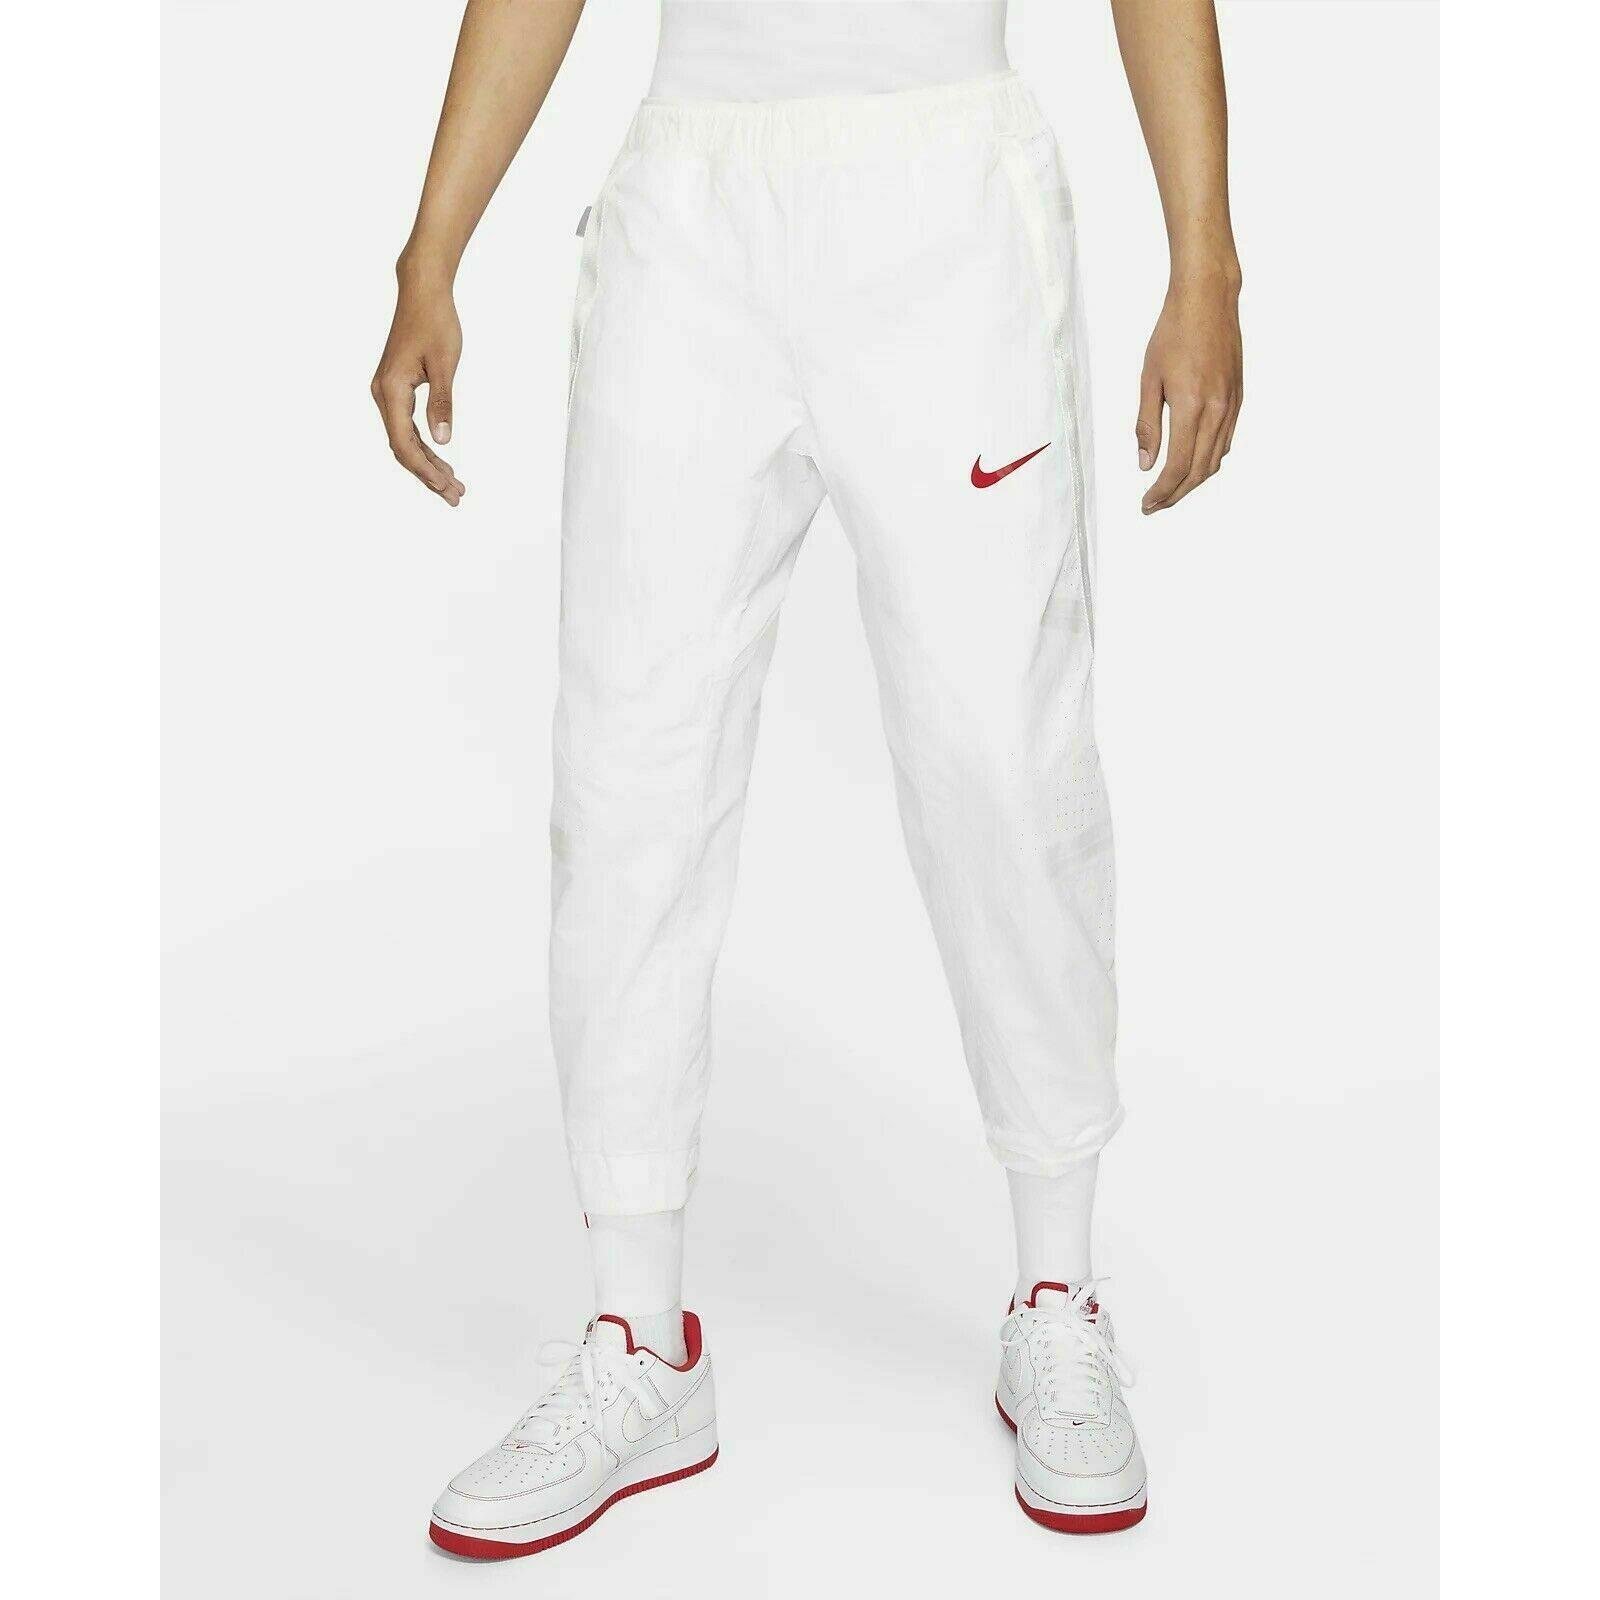 Nike Team Usa Tokyo Olympics Medalstand Pants CK4559-100 White Men Medium